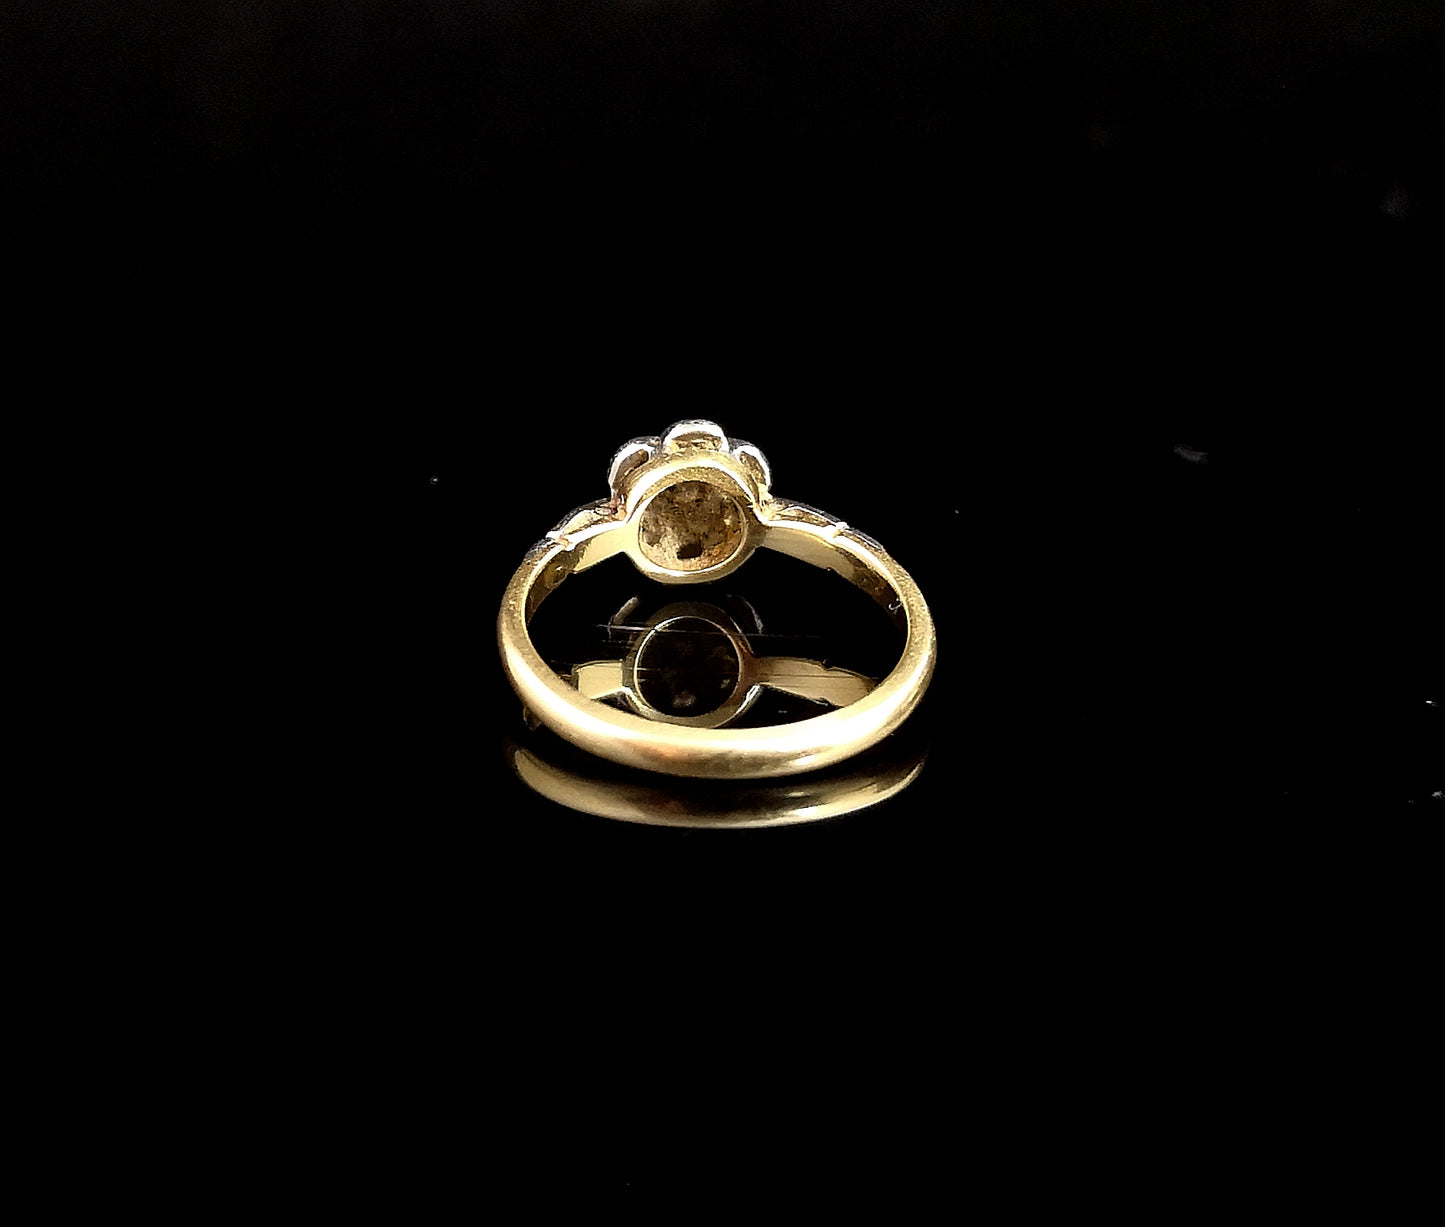 Antique Diamond flower ring, 18ct gold and platinum